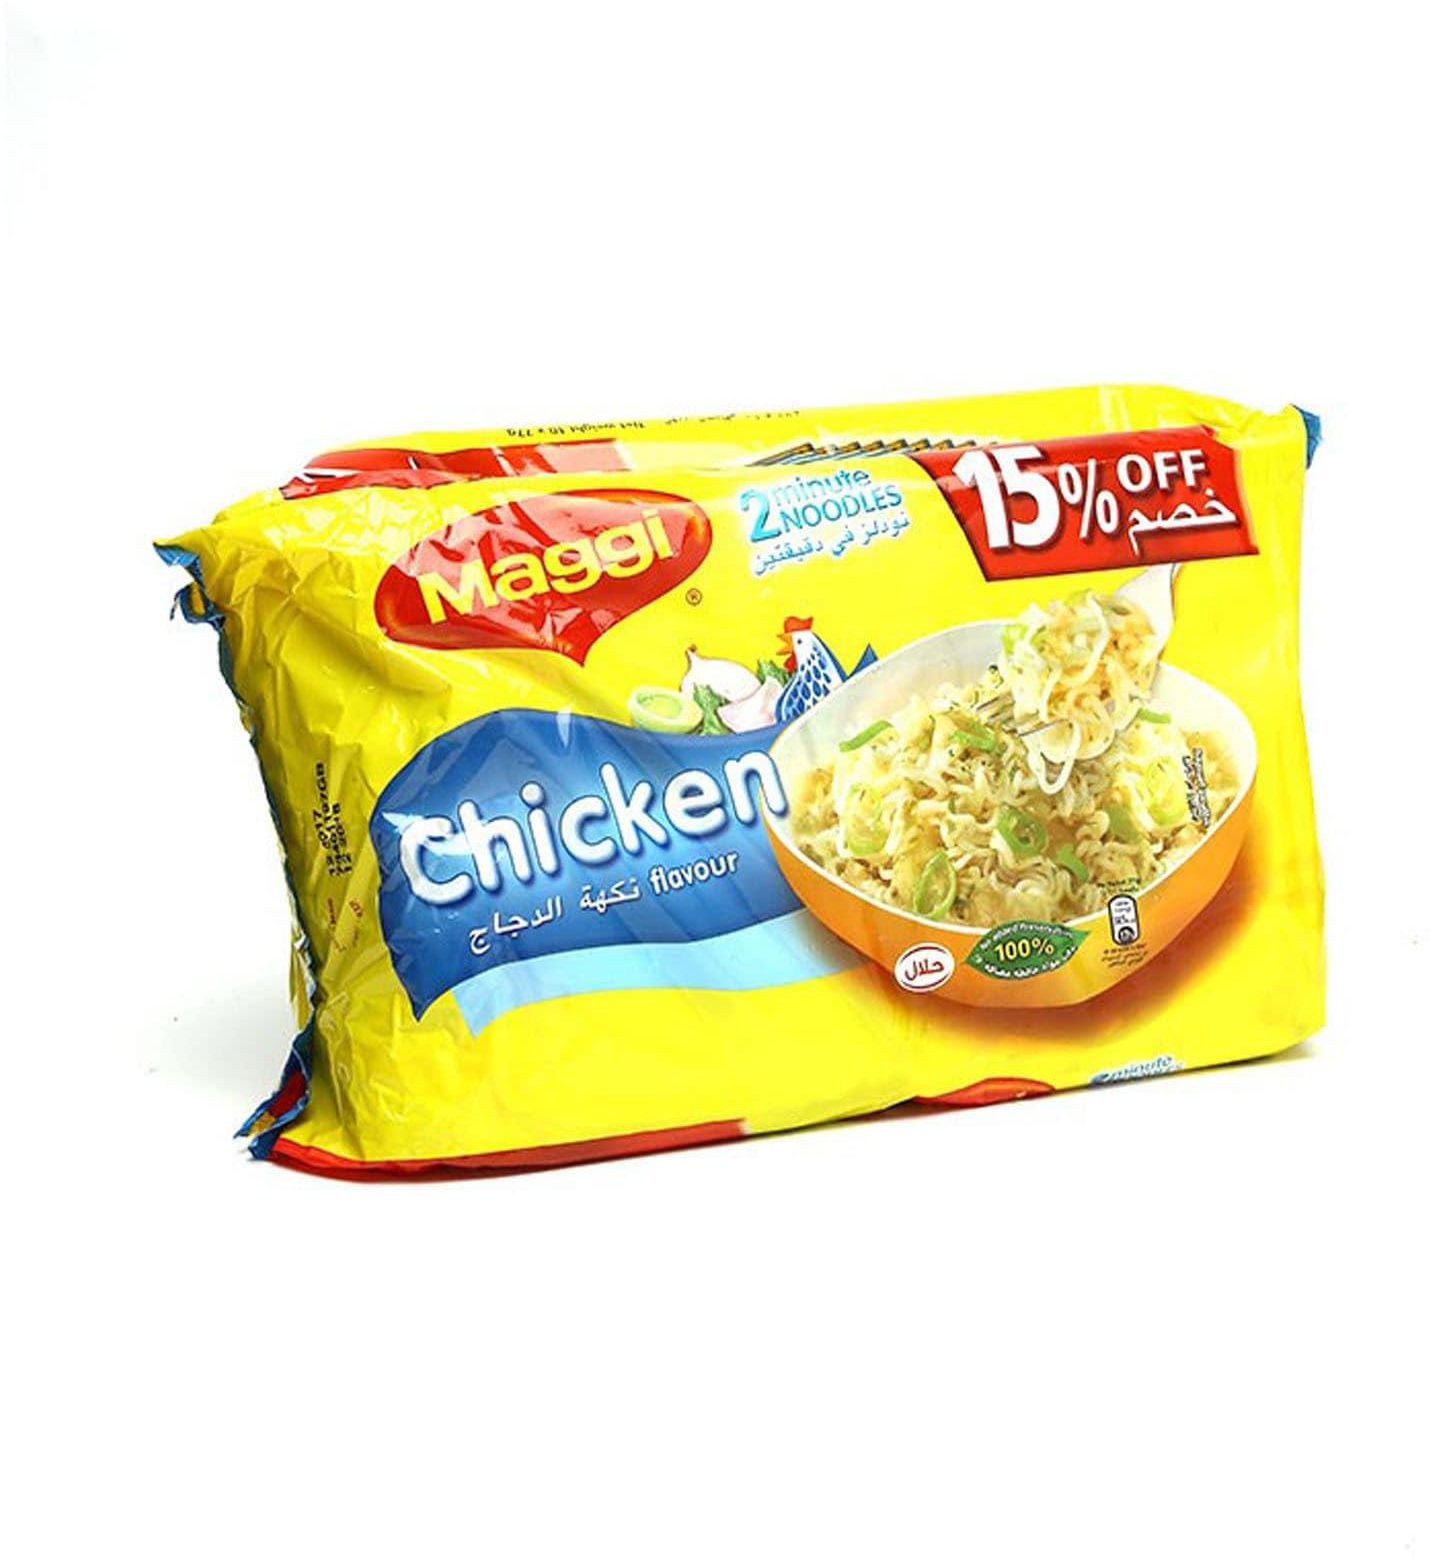 Maggi 2 minutes noodles chicken flavour 77 g x 10 pieces